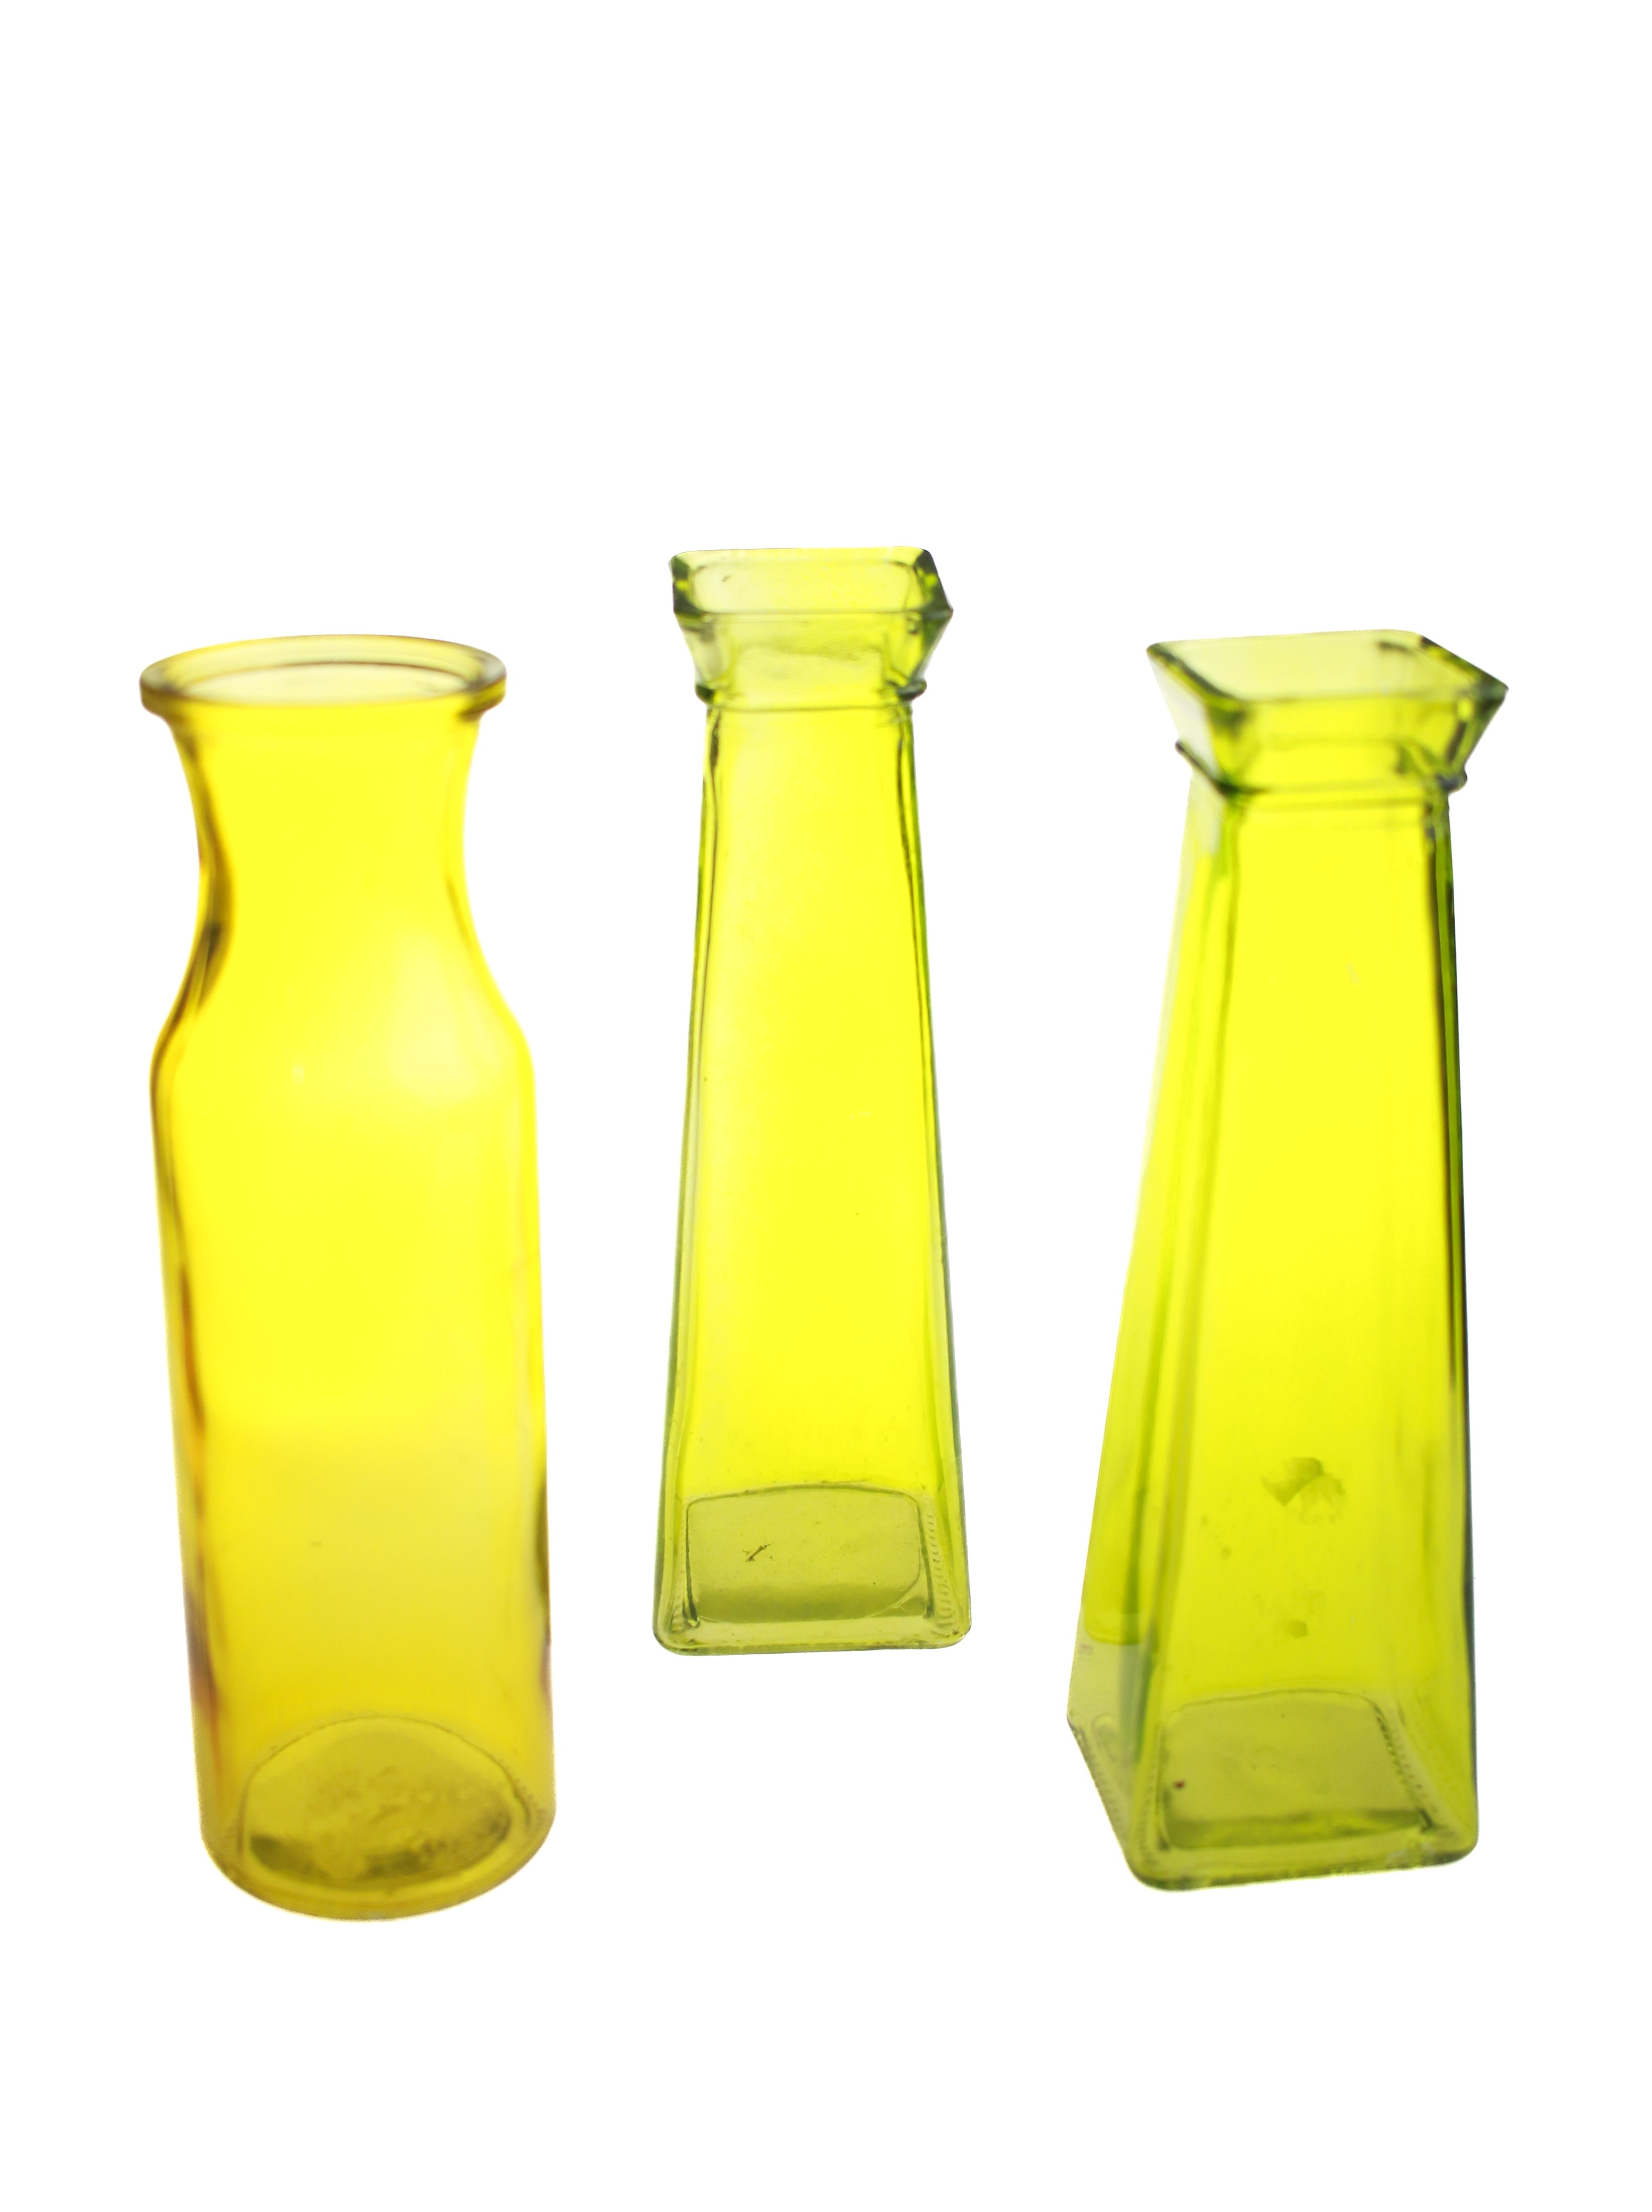 Whit's Vintage Picks-- Lemon and Lime Vase Set of 3